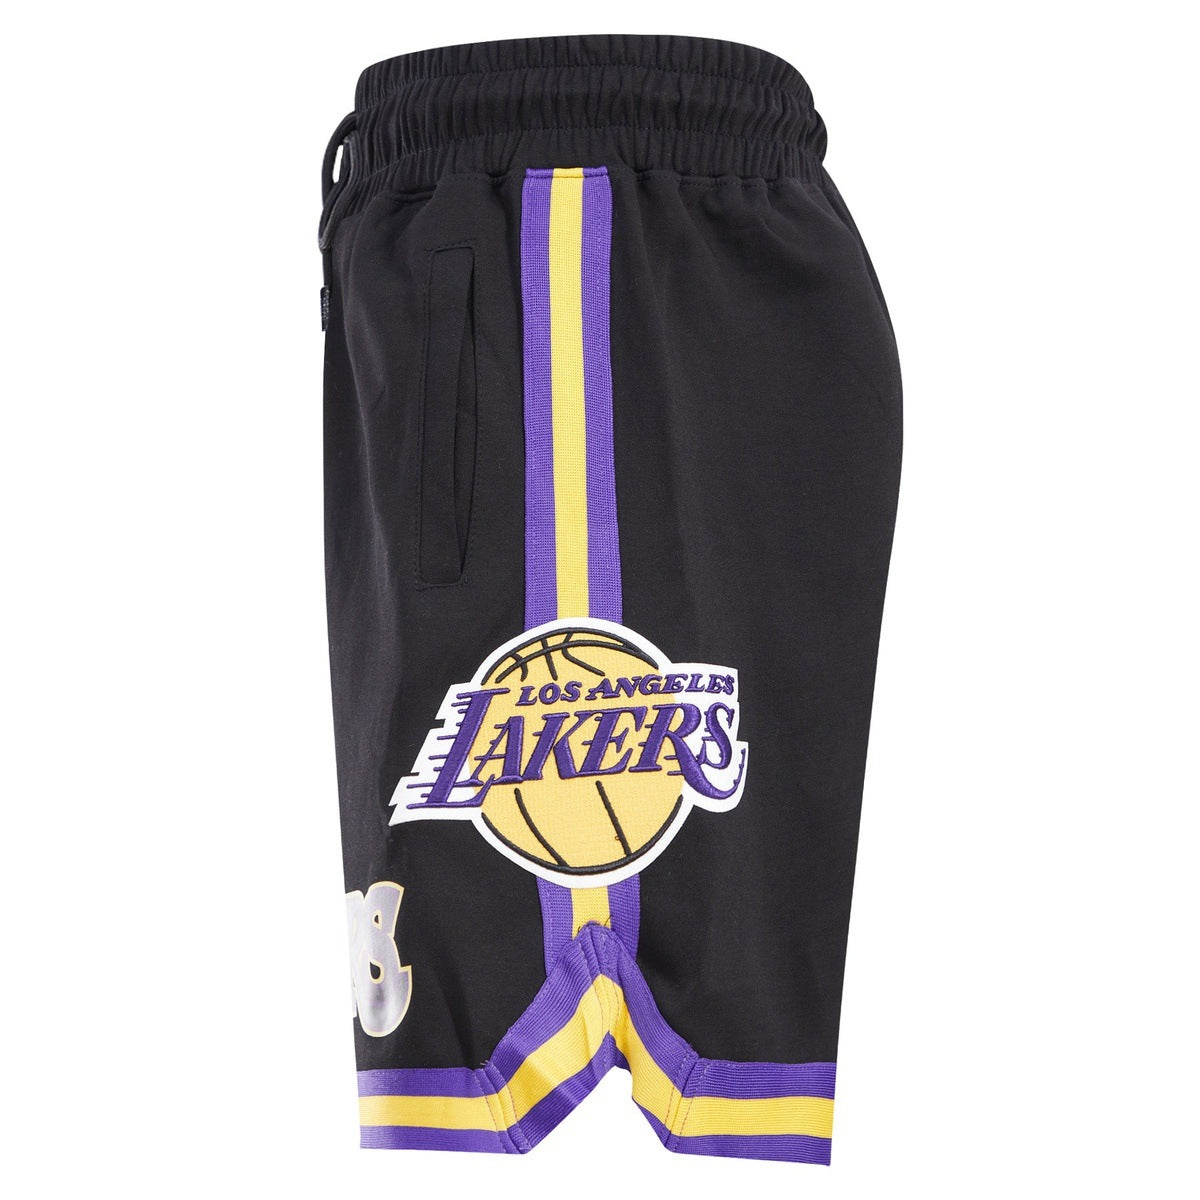 Pro Standard NBA Los Angeles Lakers Pro Team Black Men's Shorts BLL351639-BLK - S